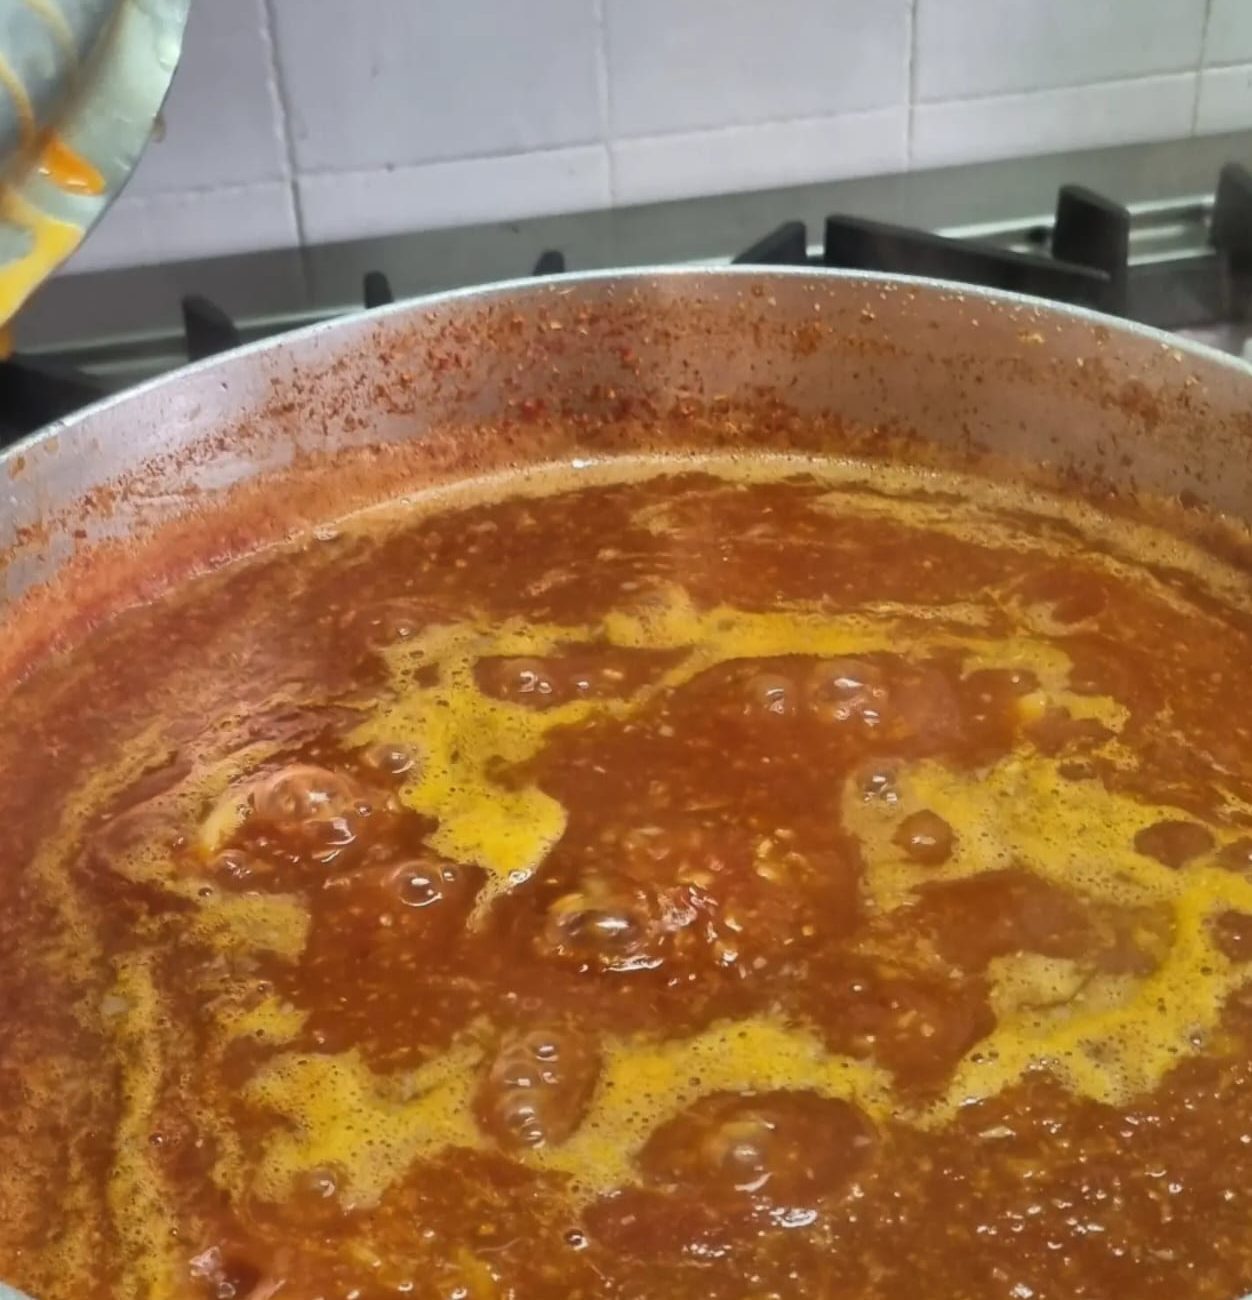 Aglione sauce in a big pot on the stove